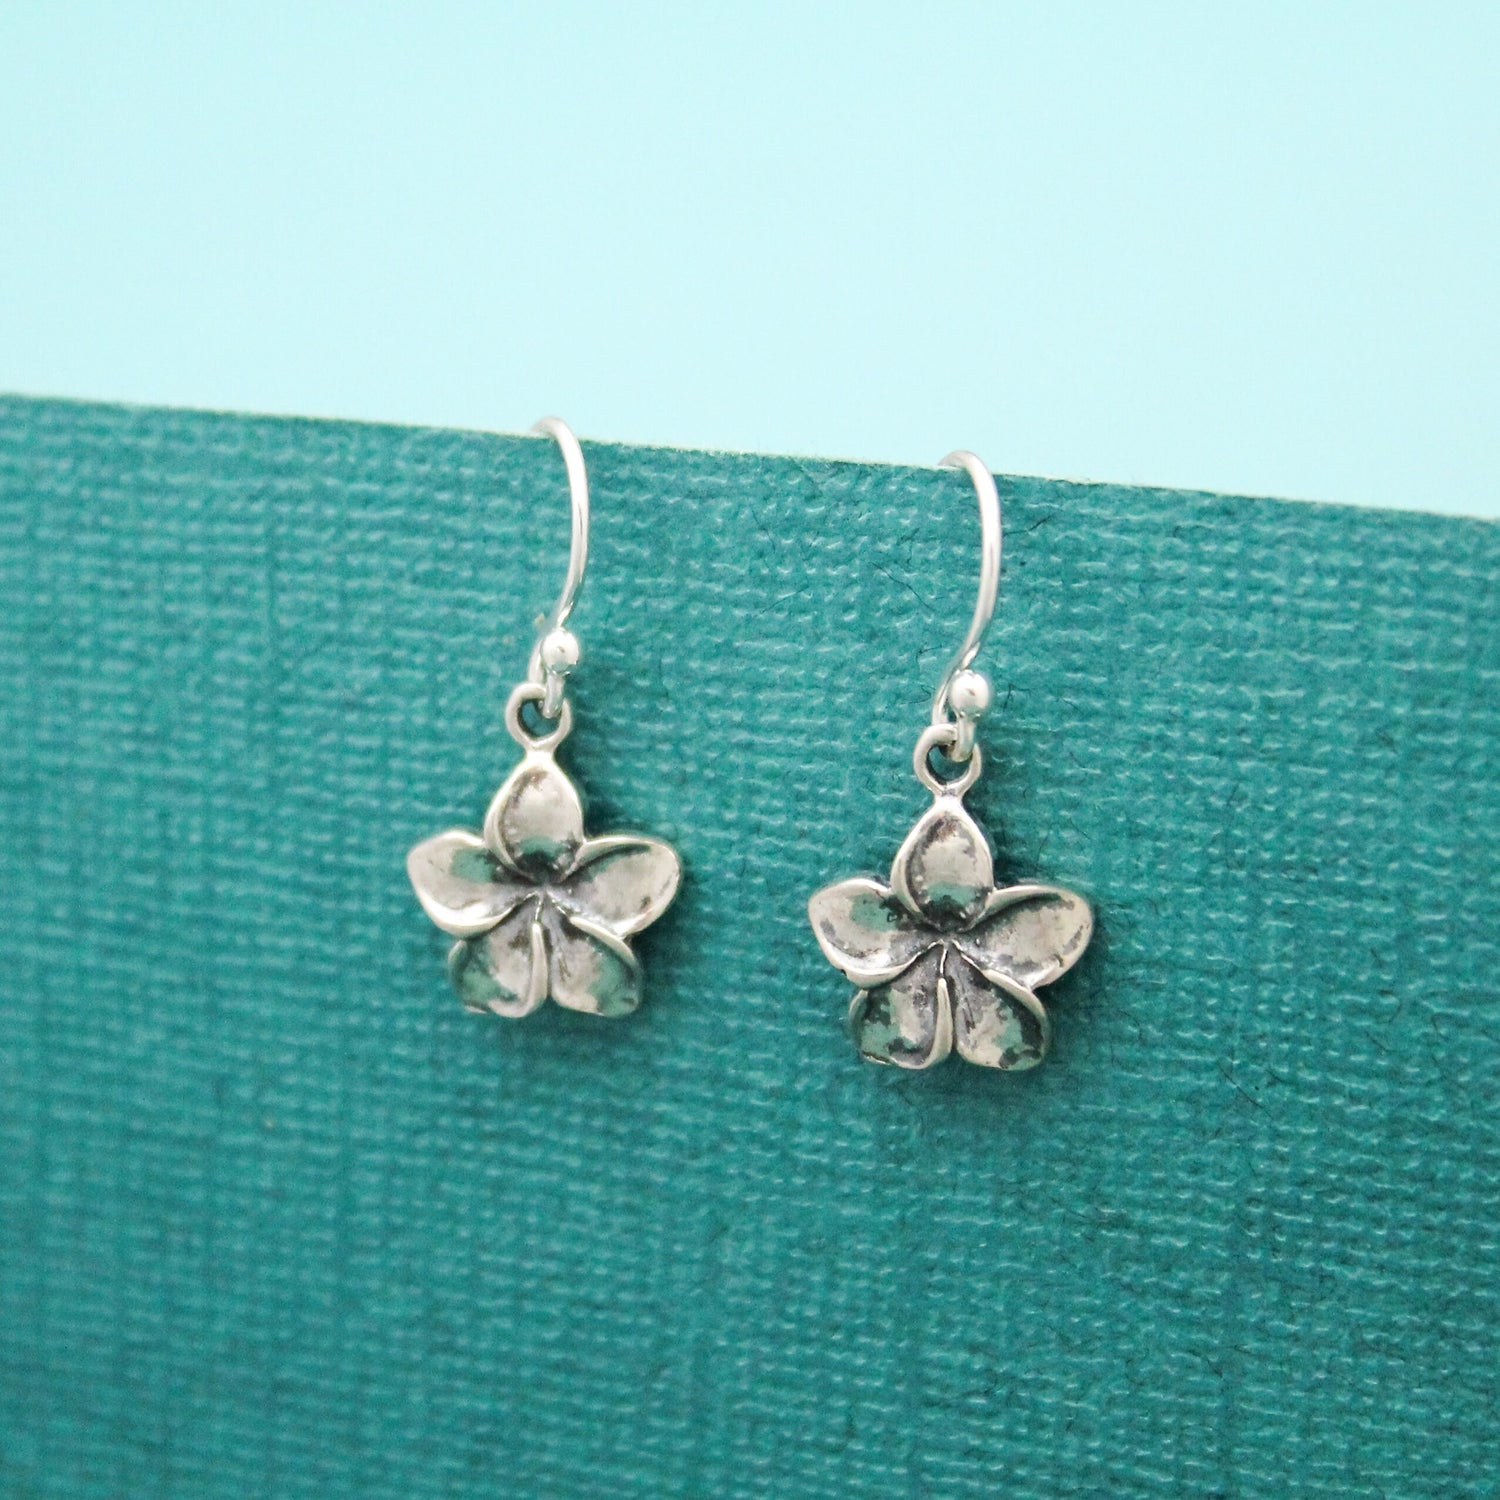 Cute Plumeria Earrings, Sterling Silver Plumeria Flower Earrings, Hawaii Flower Jewelry, Hawaii Earrings, Mother's Day Gift, Gifts for Her